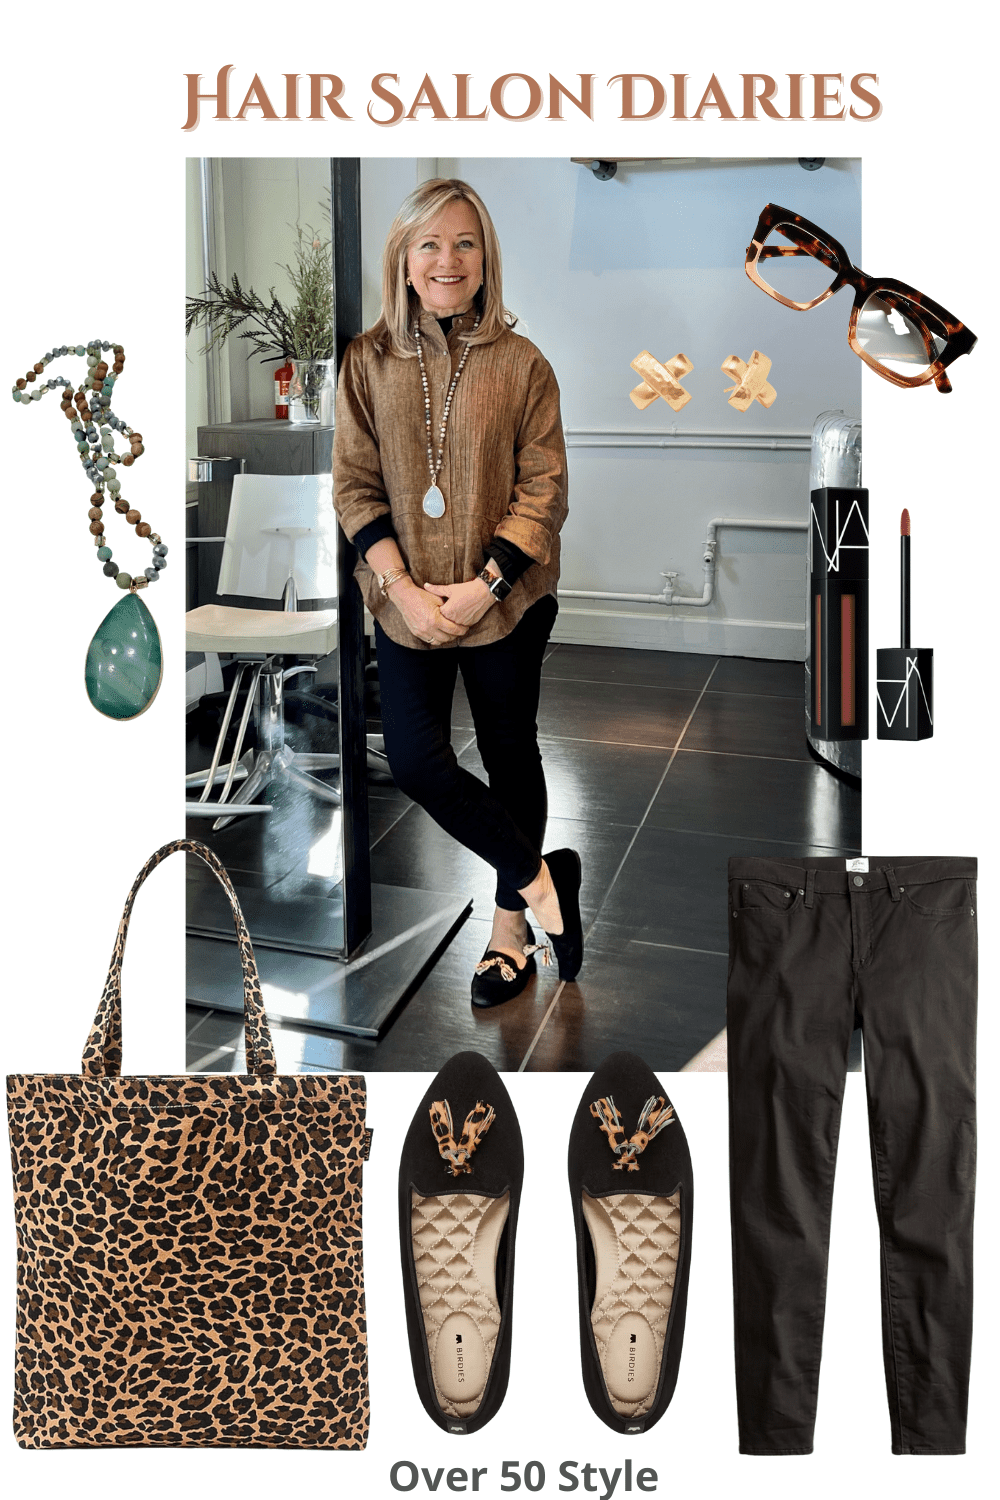 Mary Ann Pickett in black jeans and cheetah print